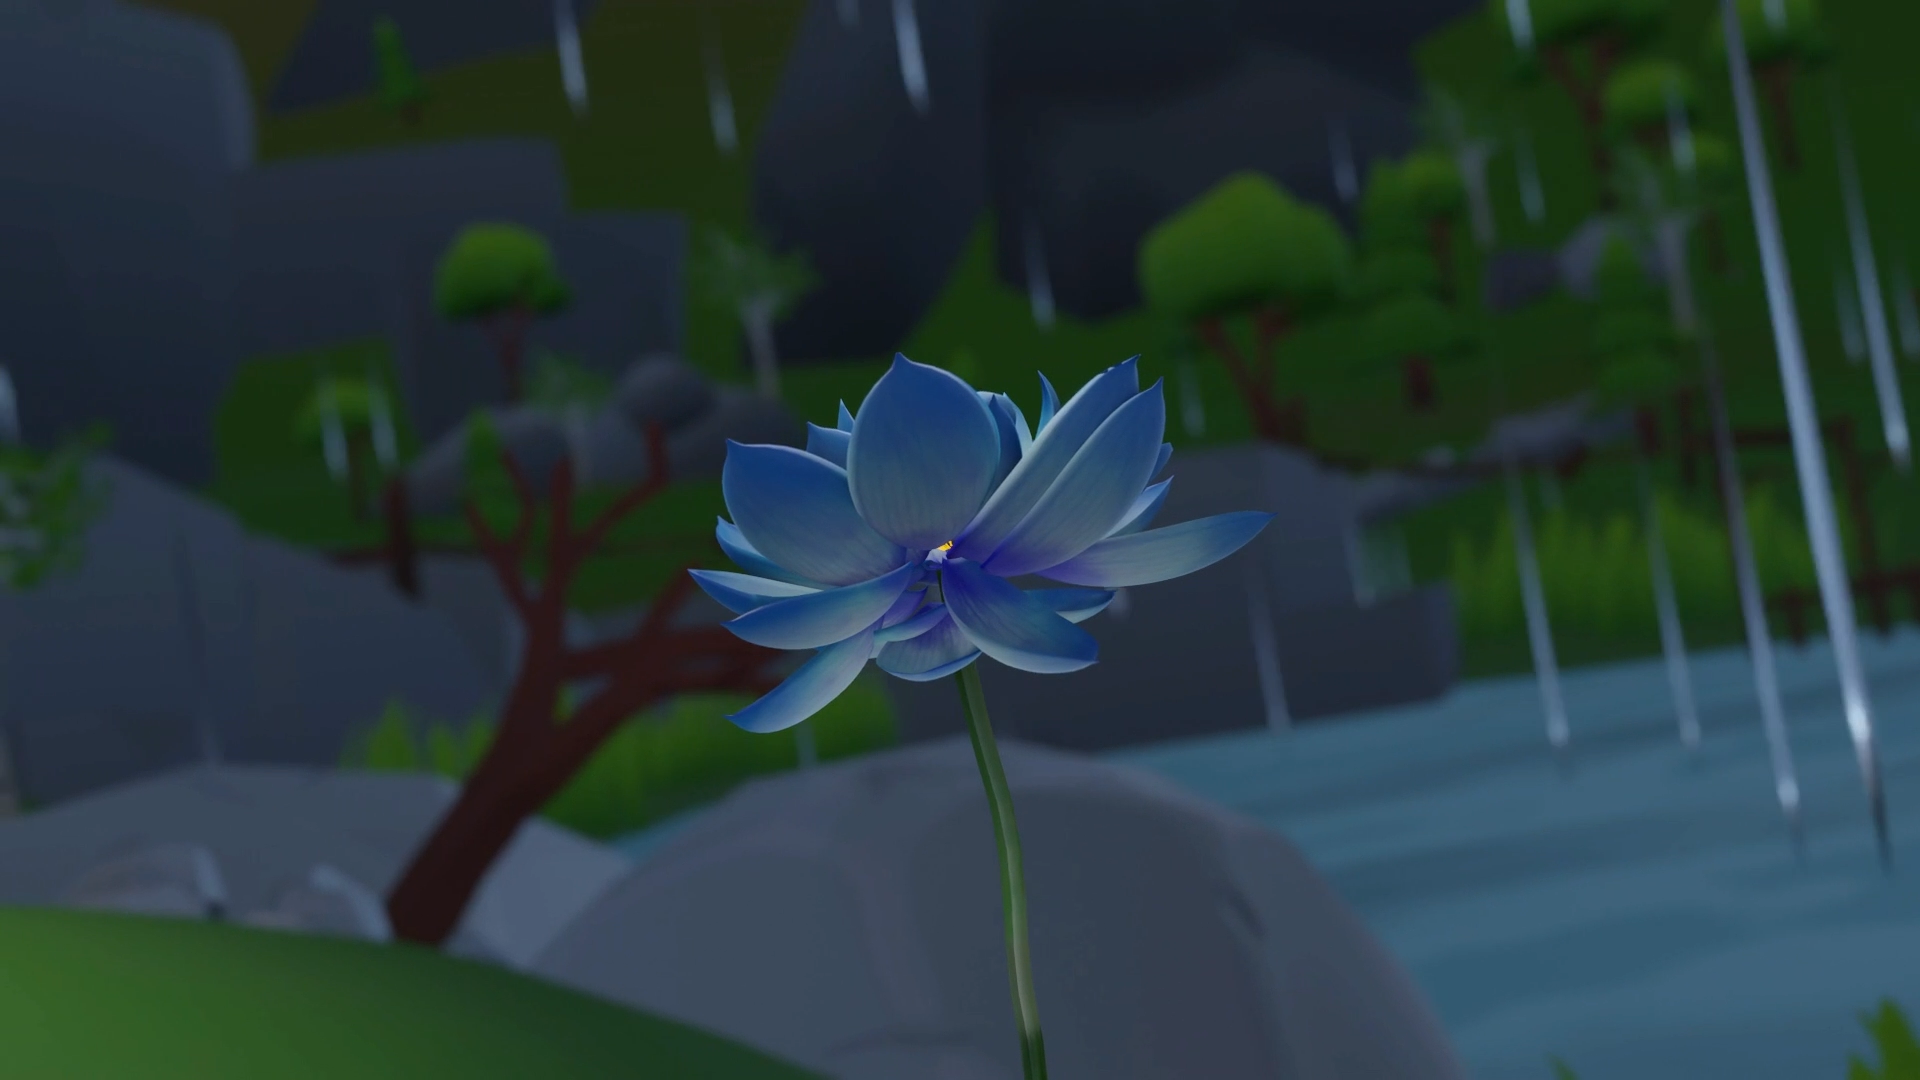 Blooming-Flower-In-The-Rain